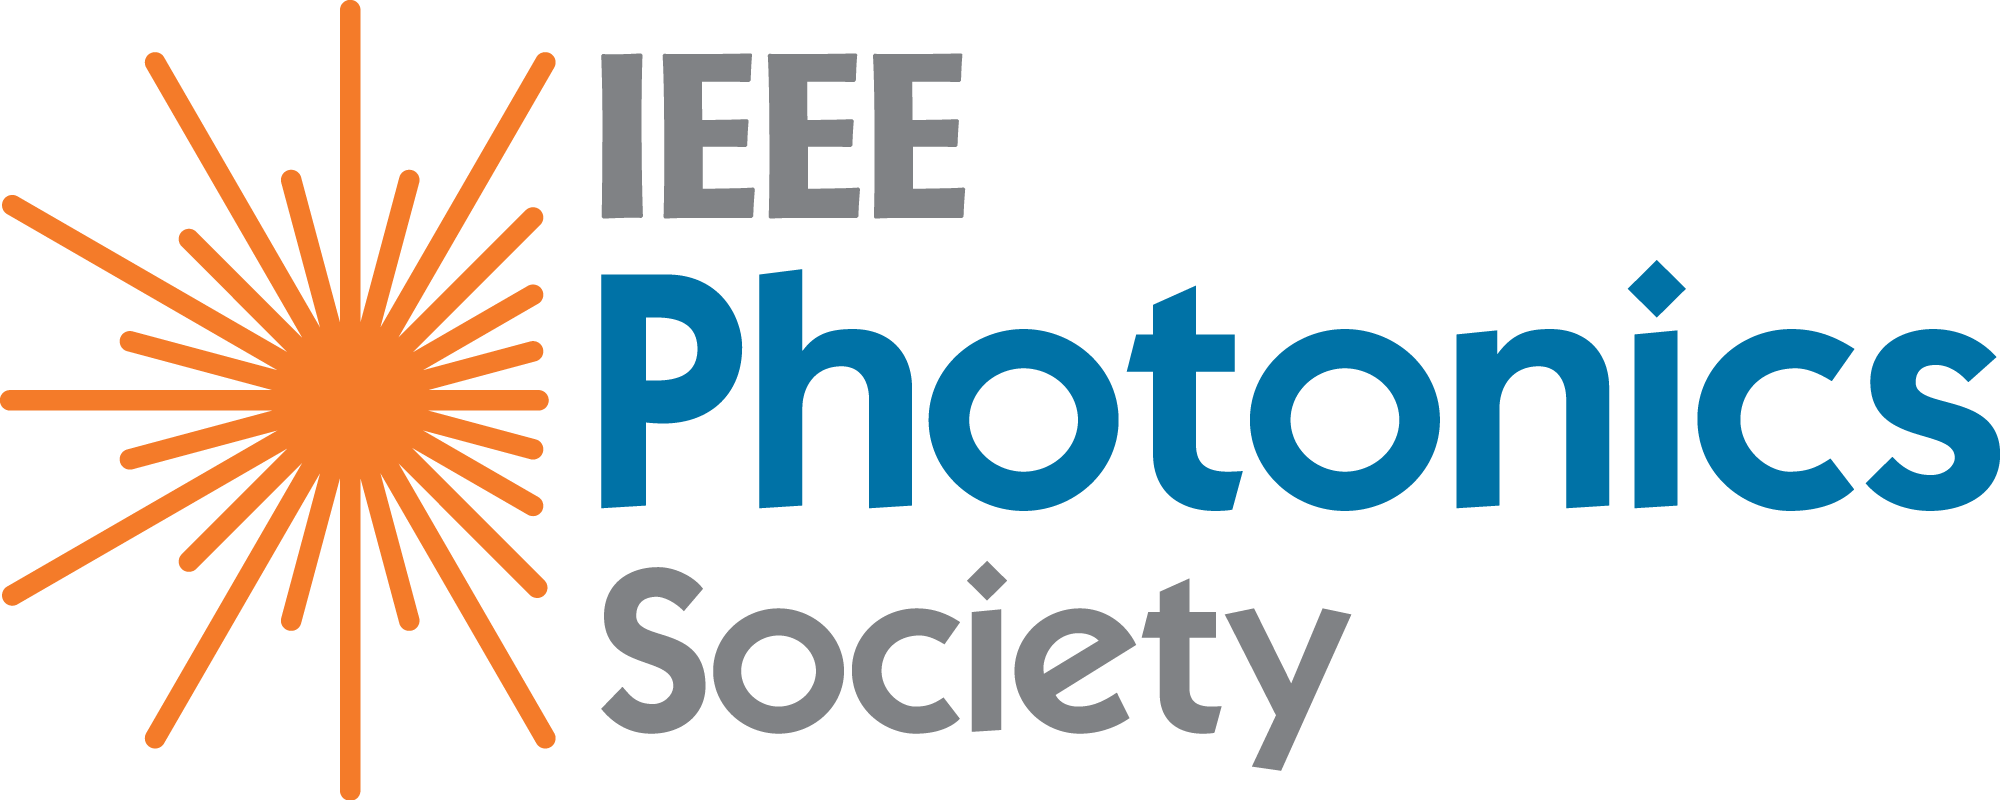 IEEE Photonics